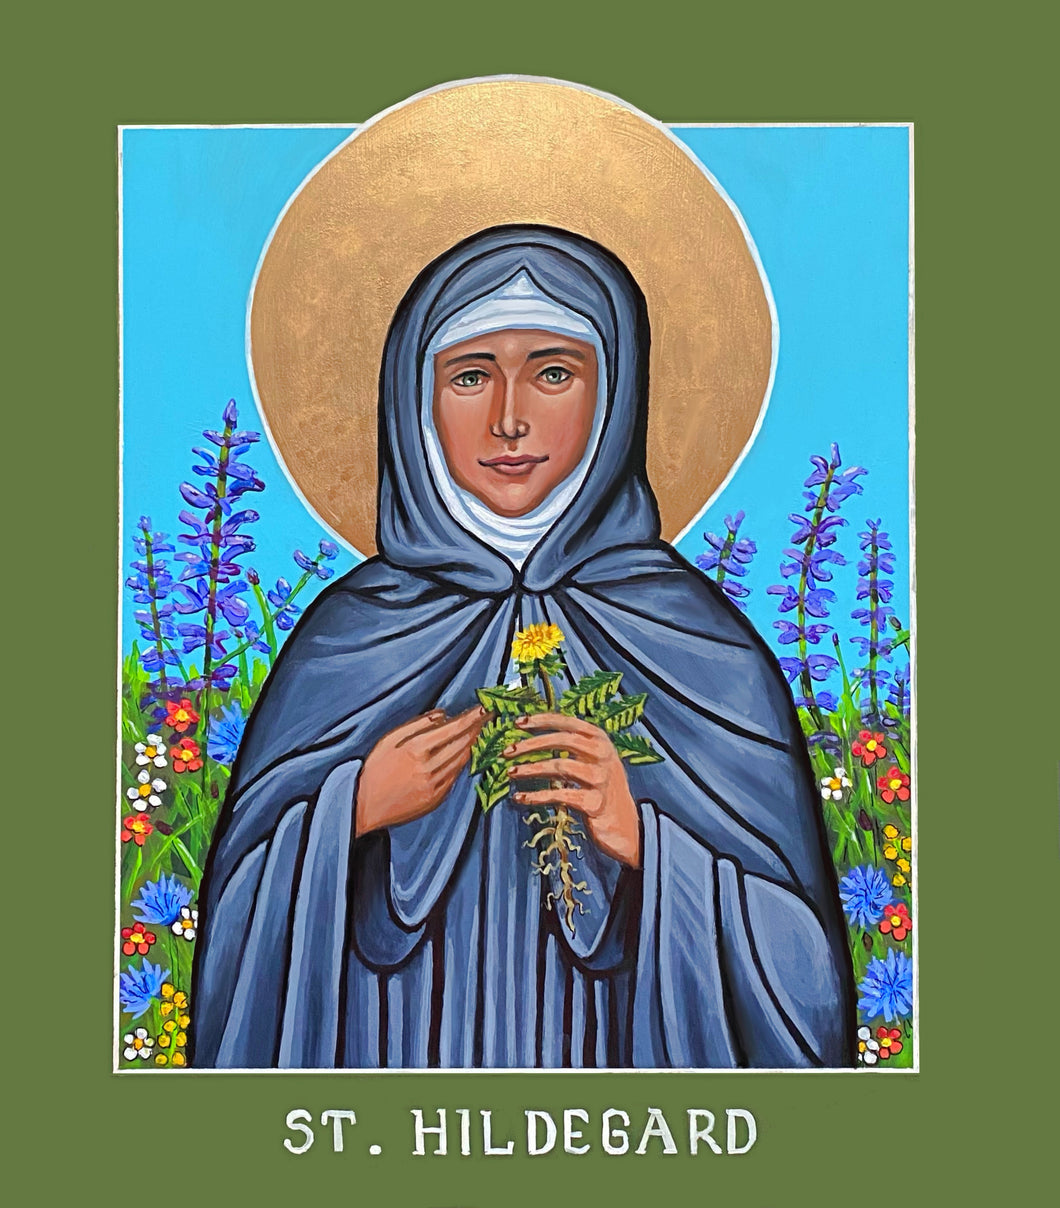 St. Hildegard Digital Image